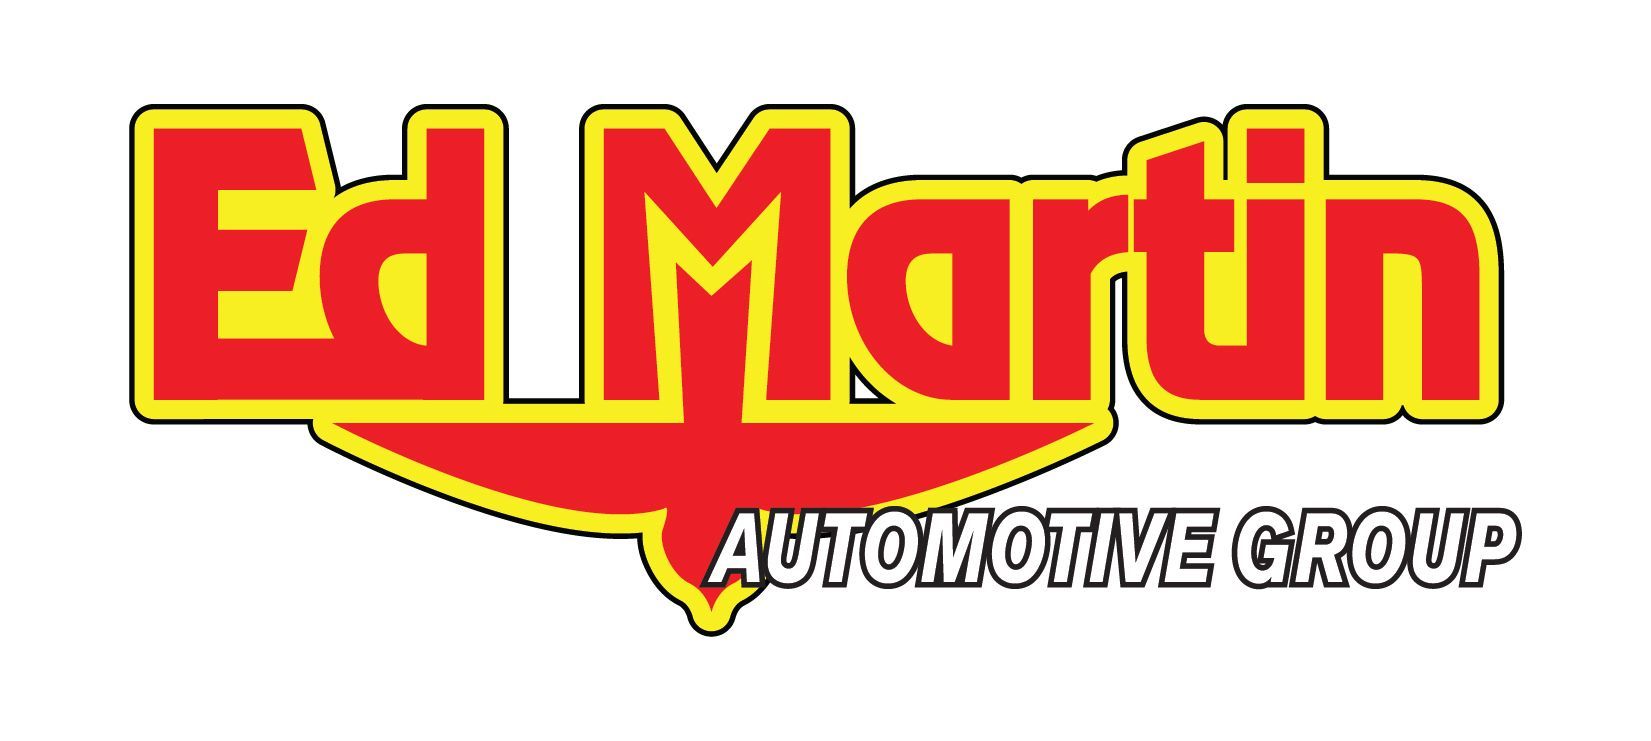 Ed Martin Automotive Group